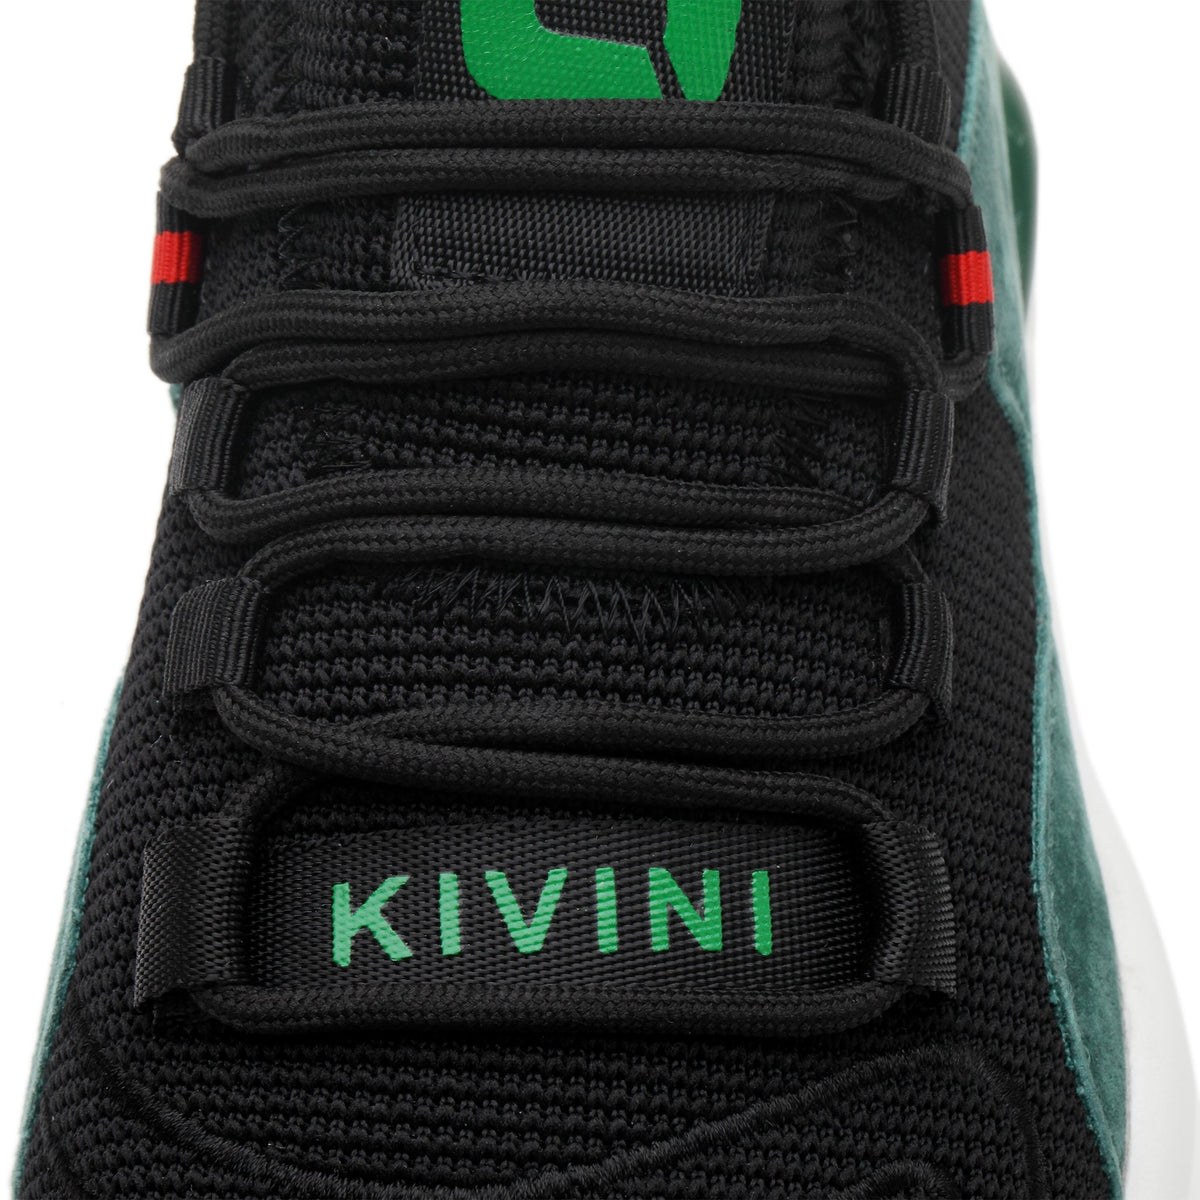 Kivini Black Green - Indestructible Shoes